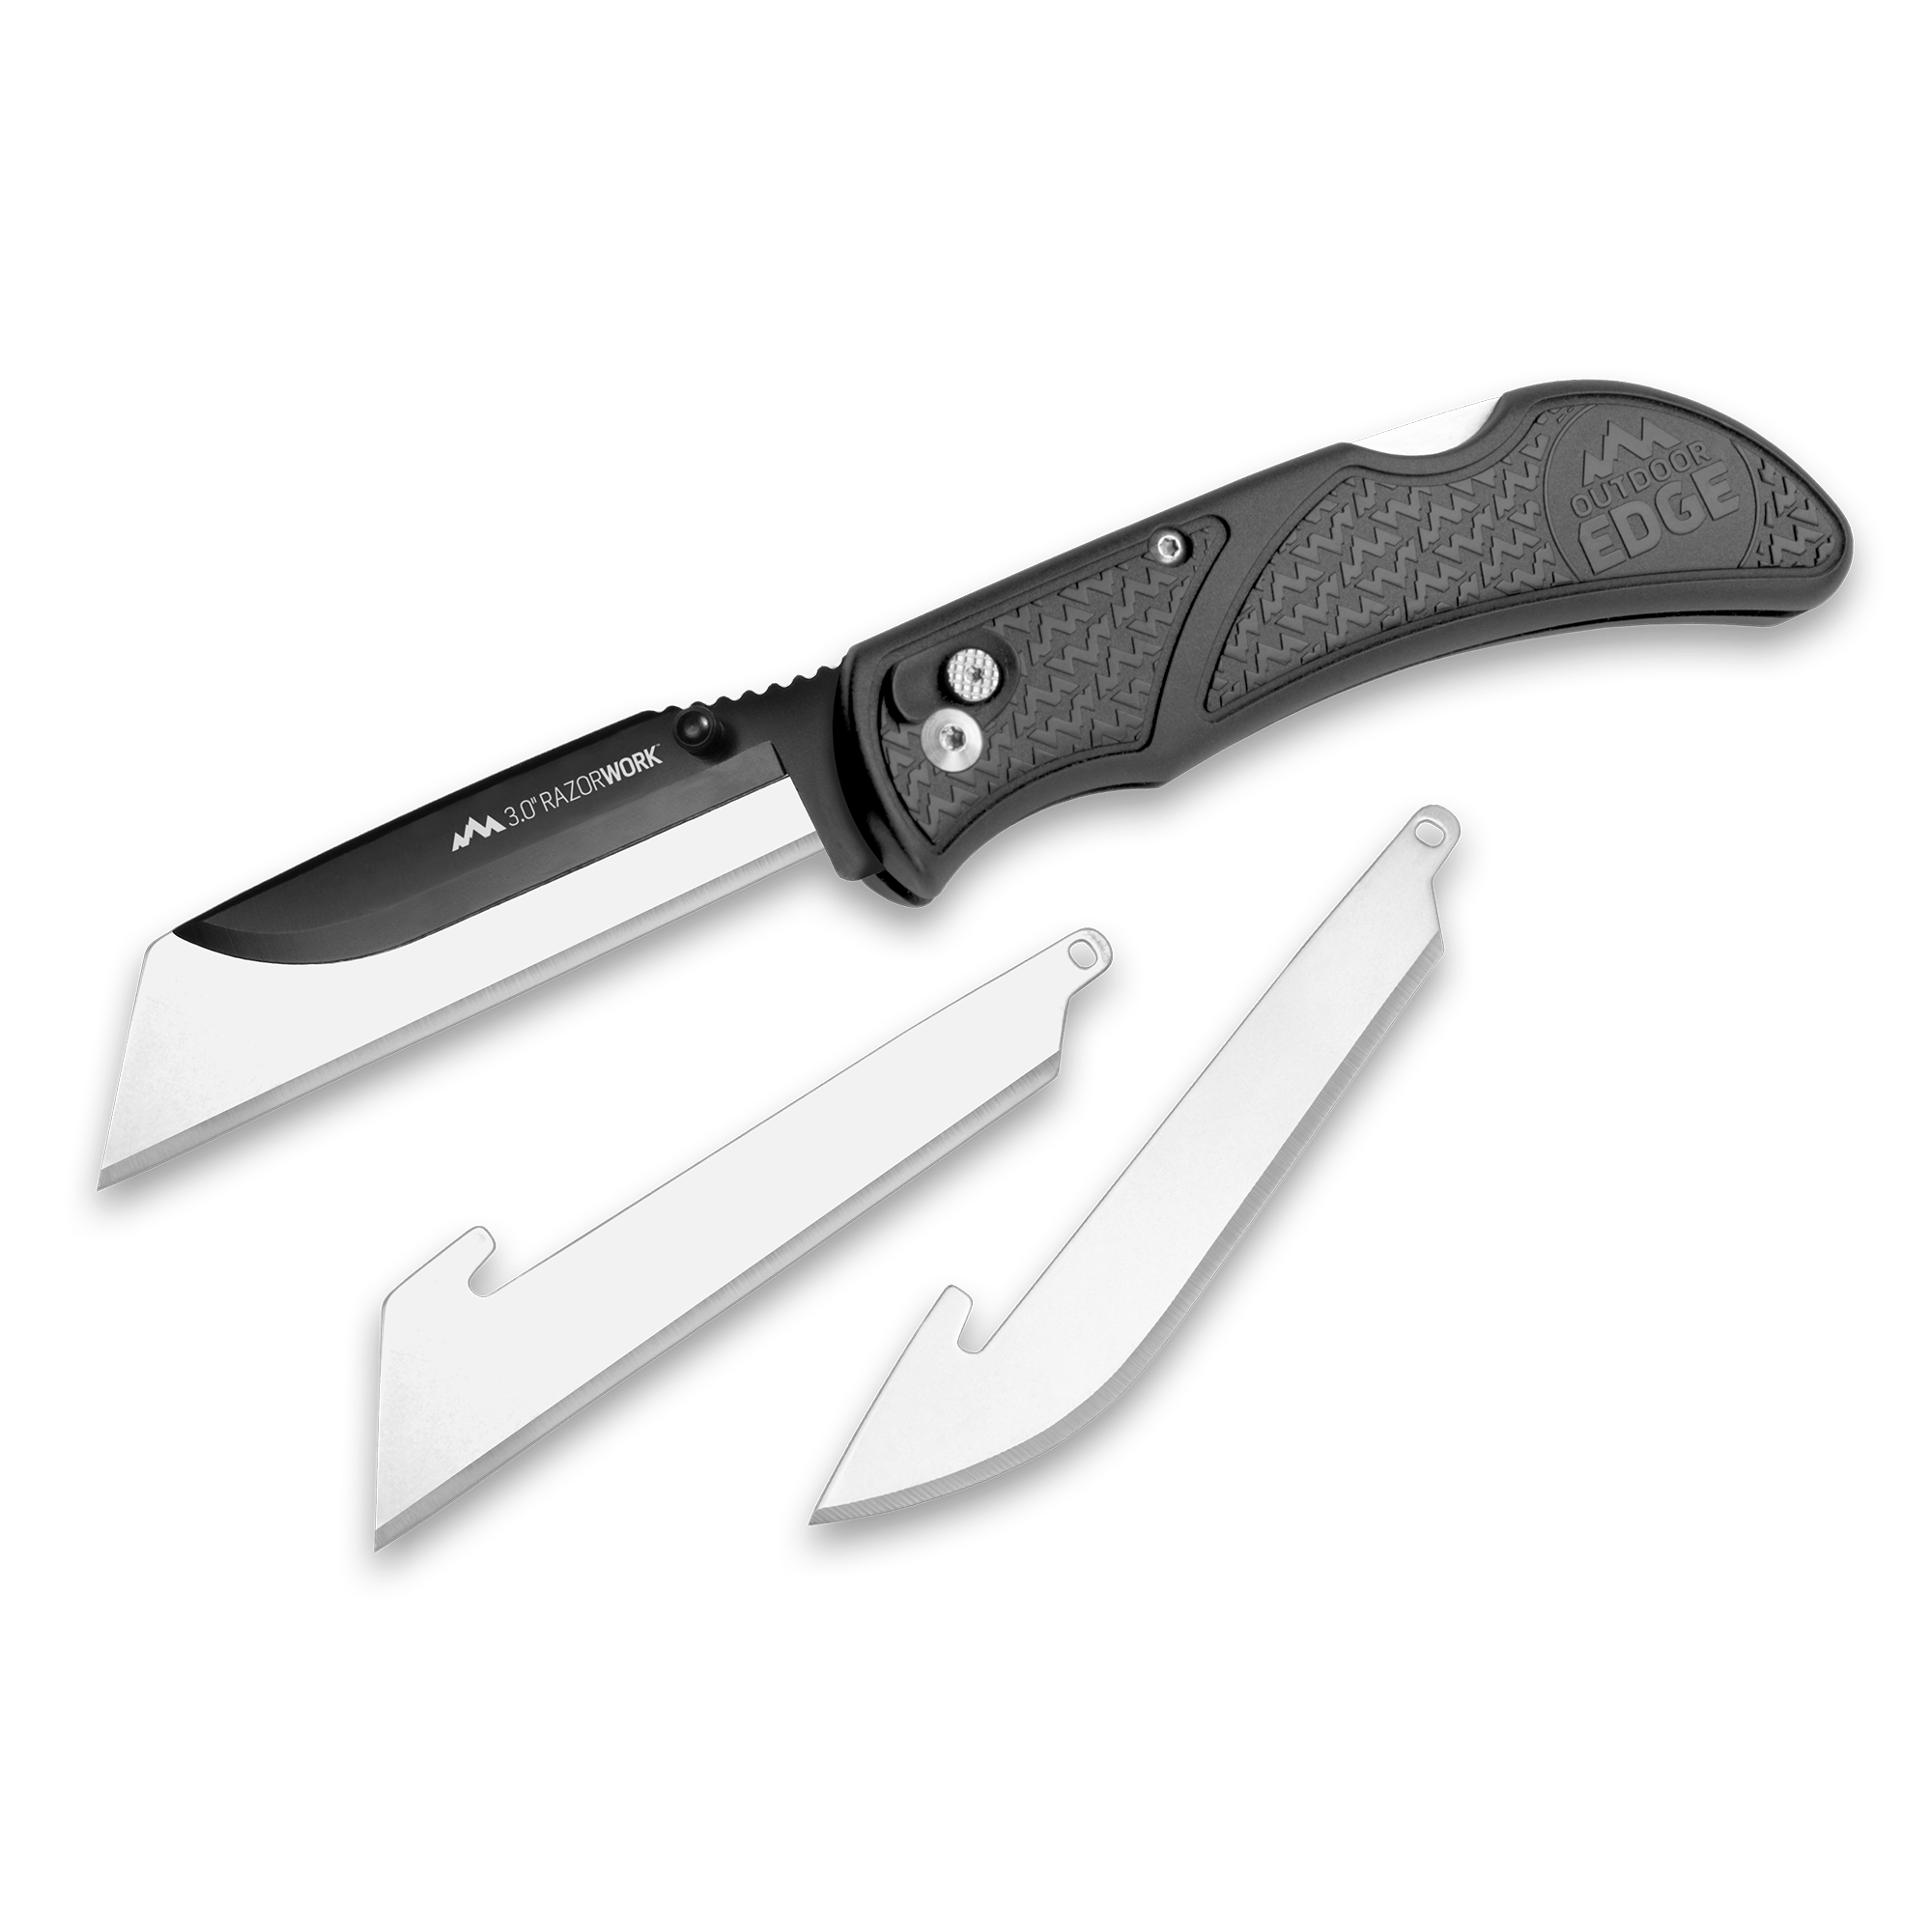 RAZORWORK® Replaceable Blade Utility Knife